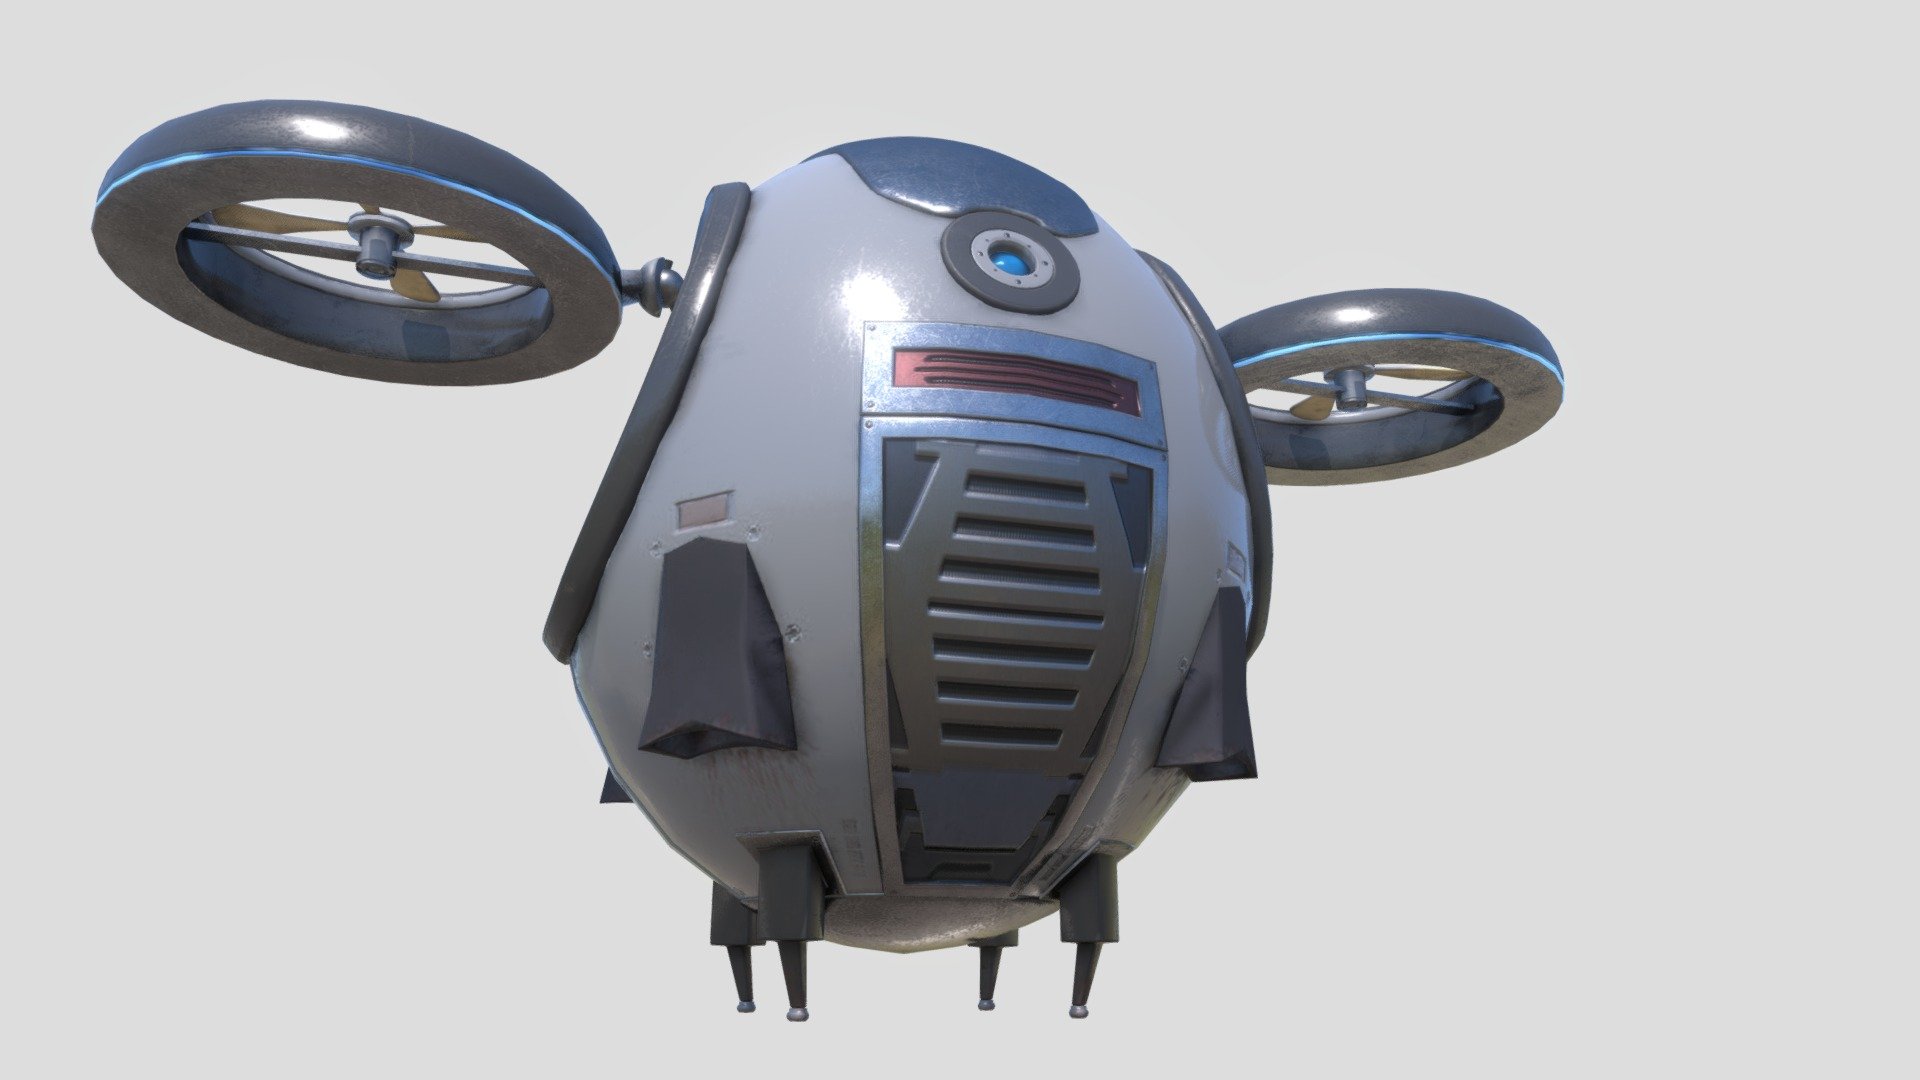 Futuristic Surveillance Drone 🛸 Download Free 3d Model By Glowbox 3d Glowbox3d 148d8e0